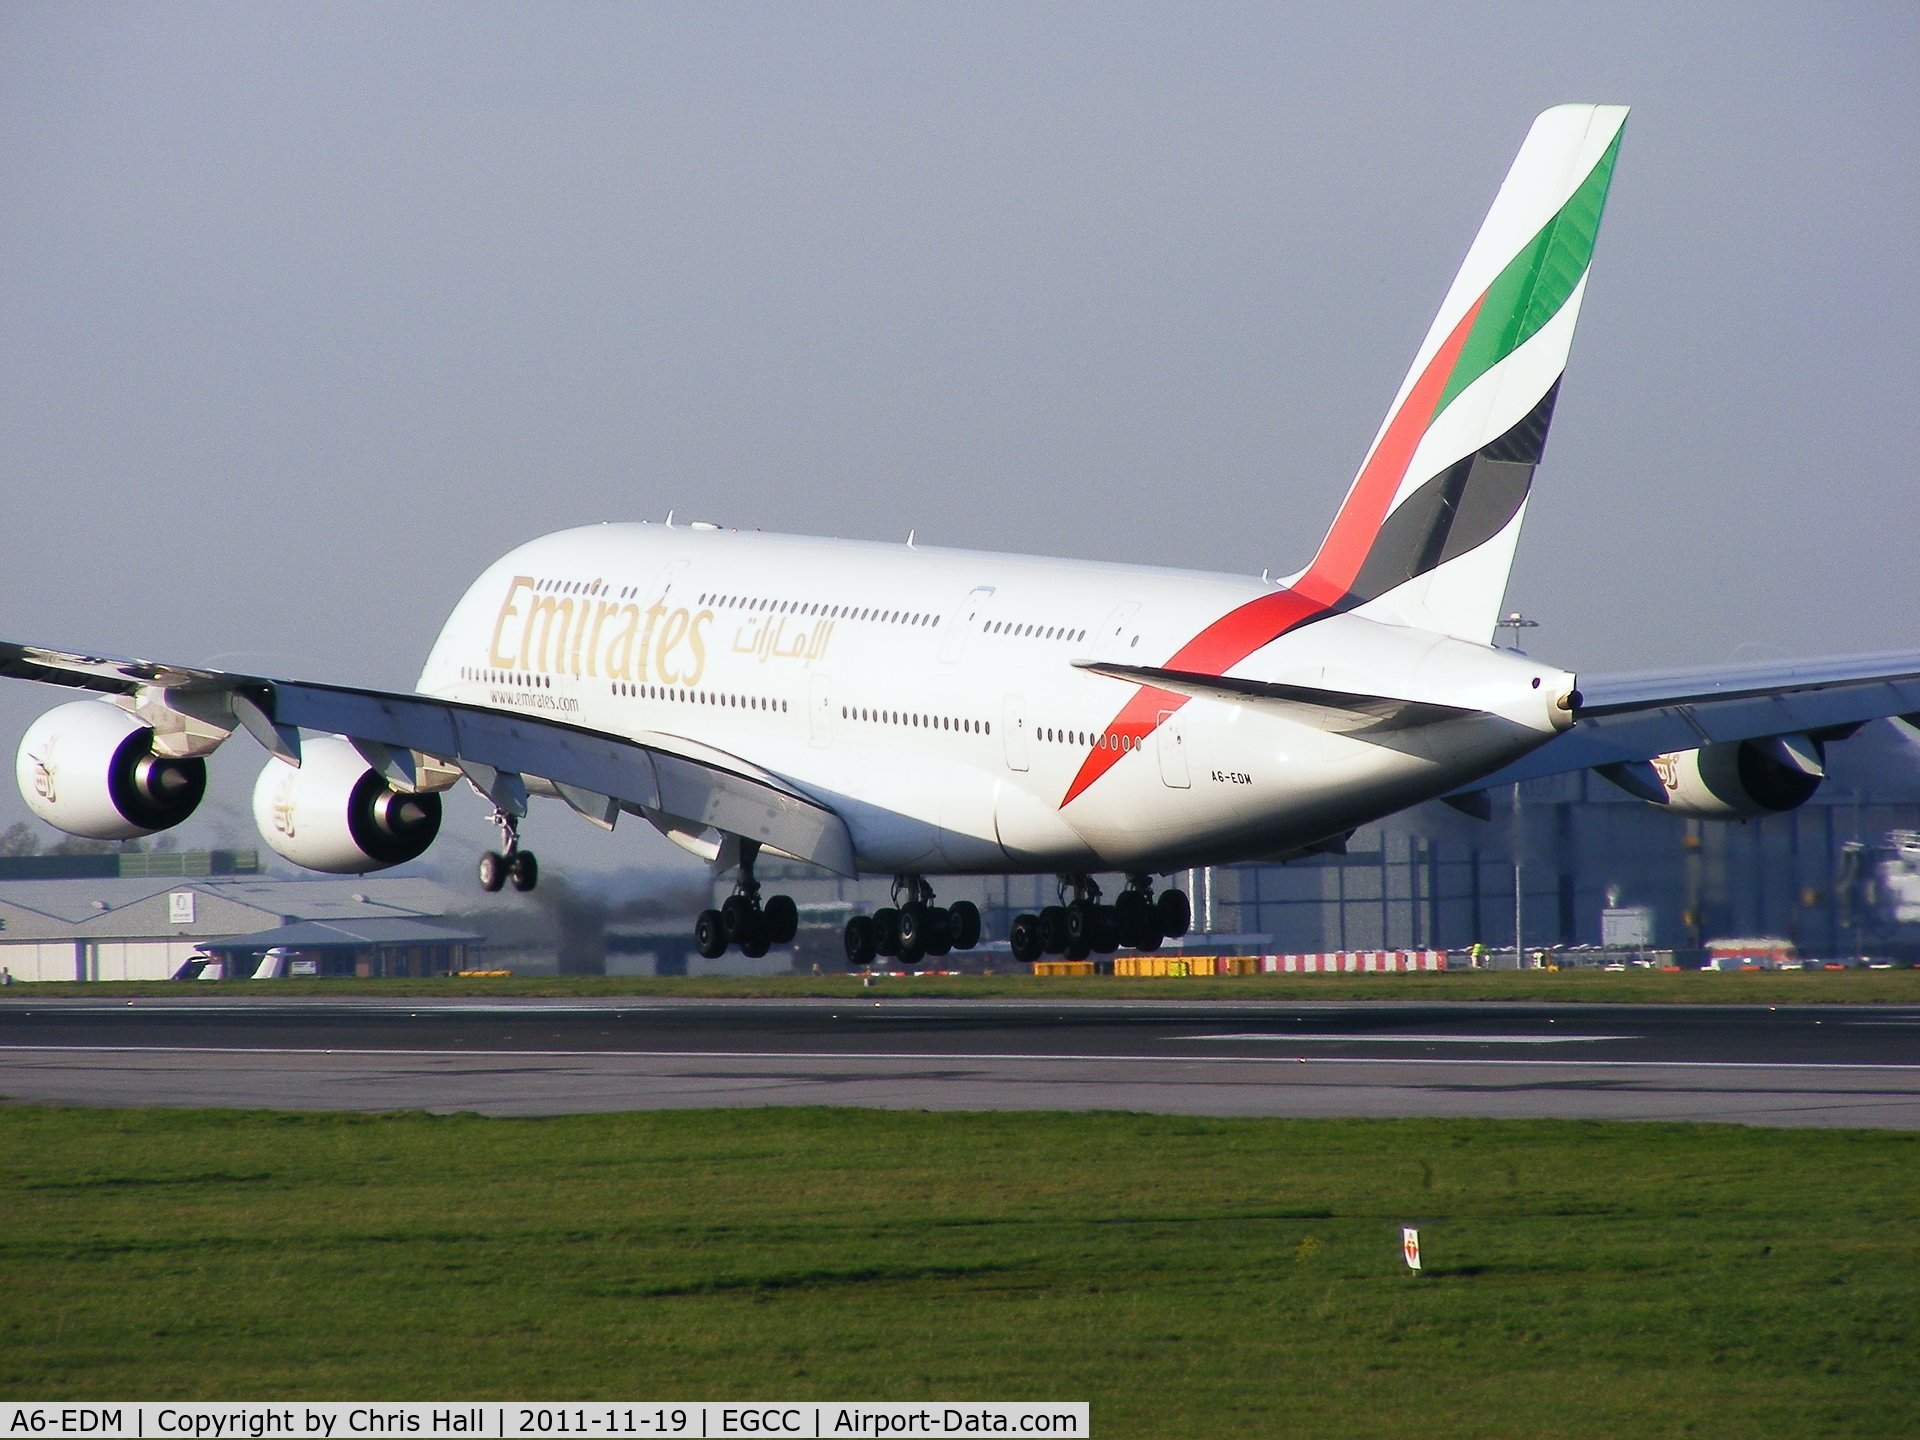 A6-EDM, 2010 Airbus A380-861 C/N 042, Emirates